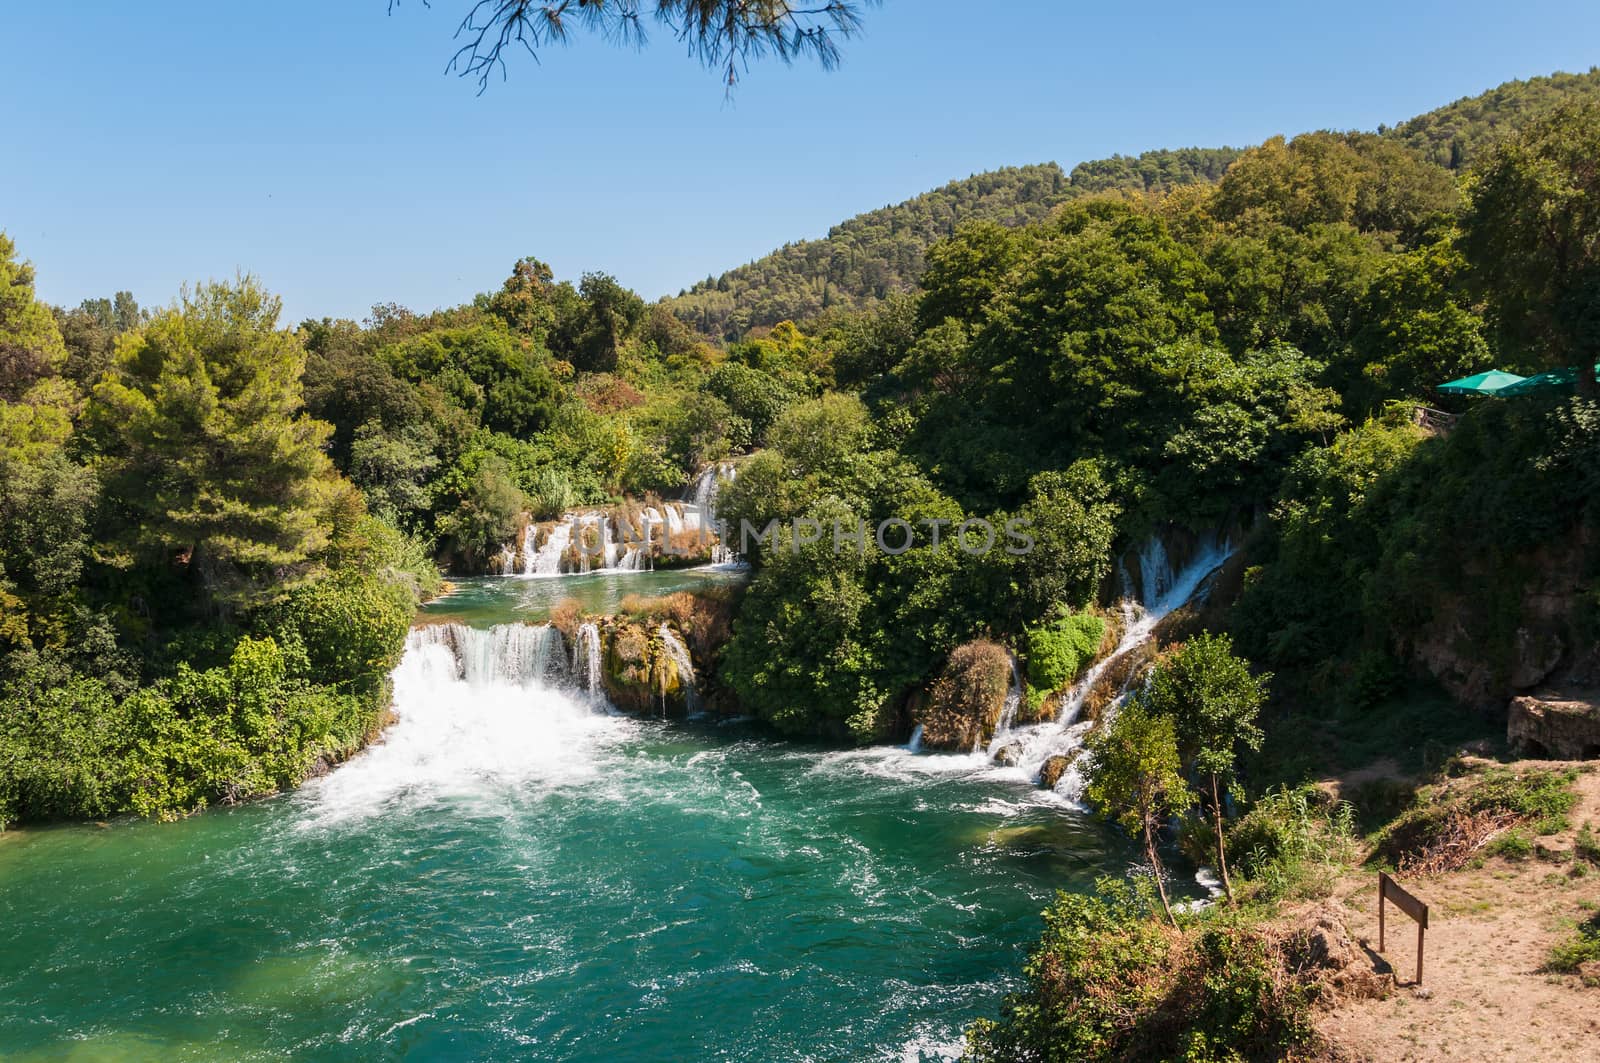 Waterfall in Krka National Park, Croatia.